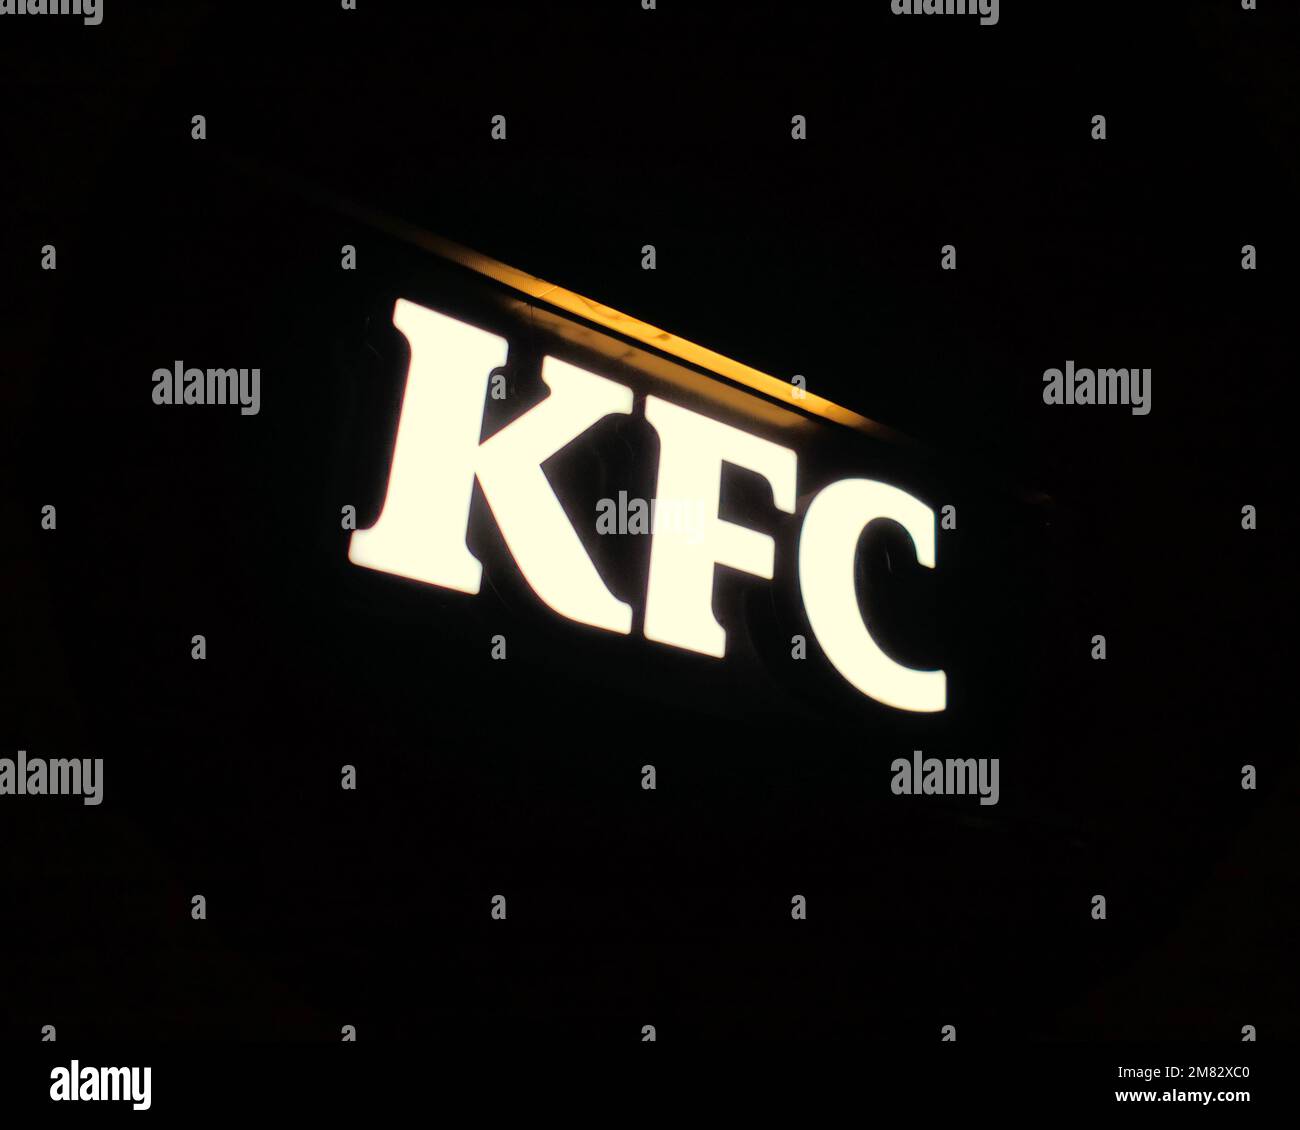 KFC Kentucky fried chicken logo sign text Stock Photo